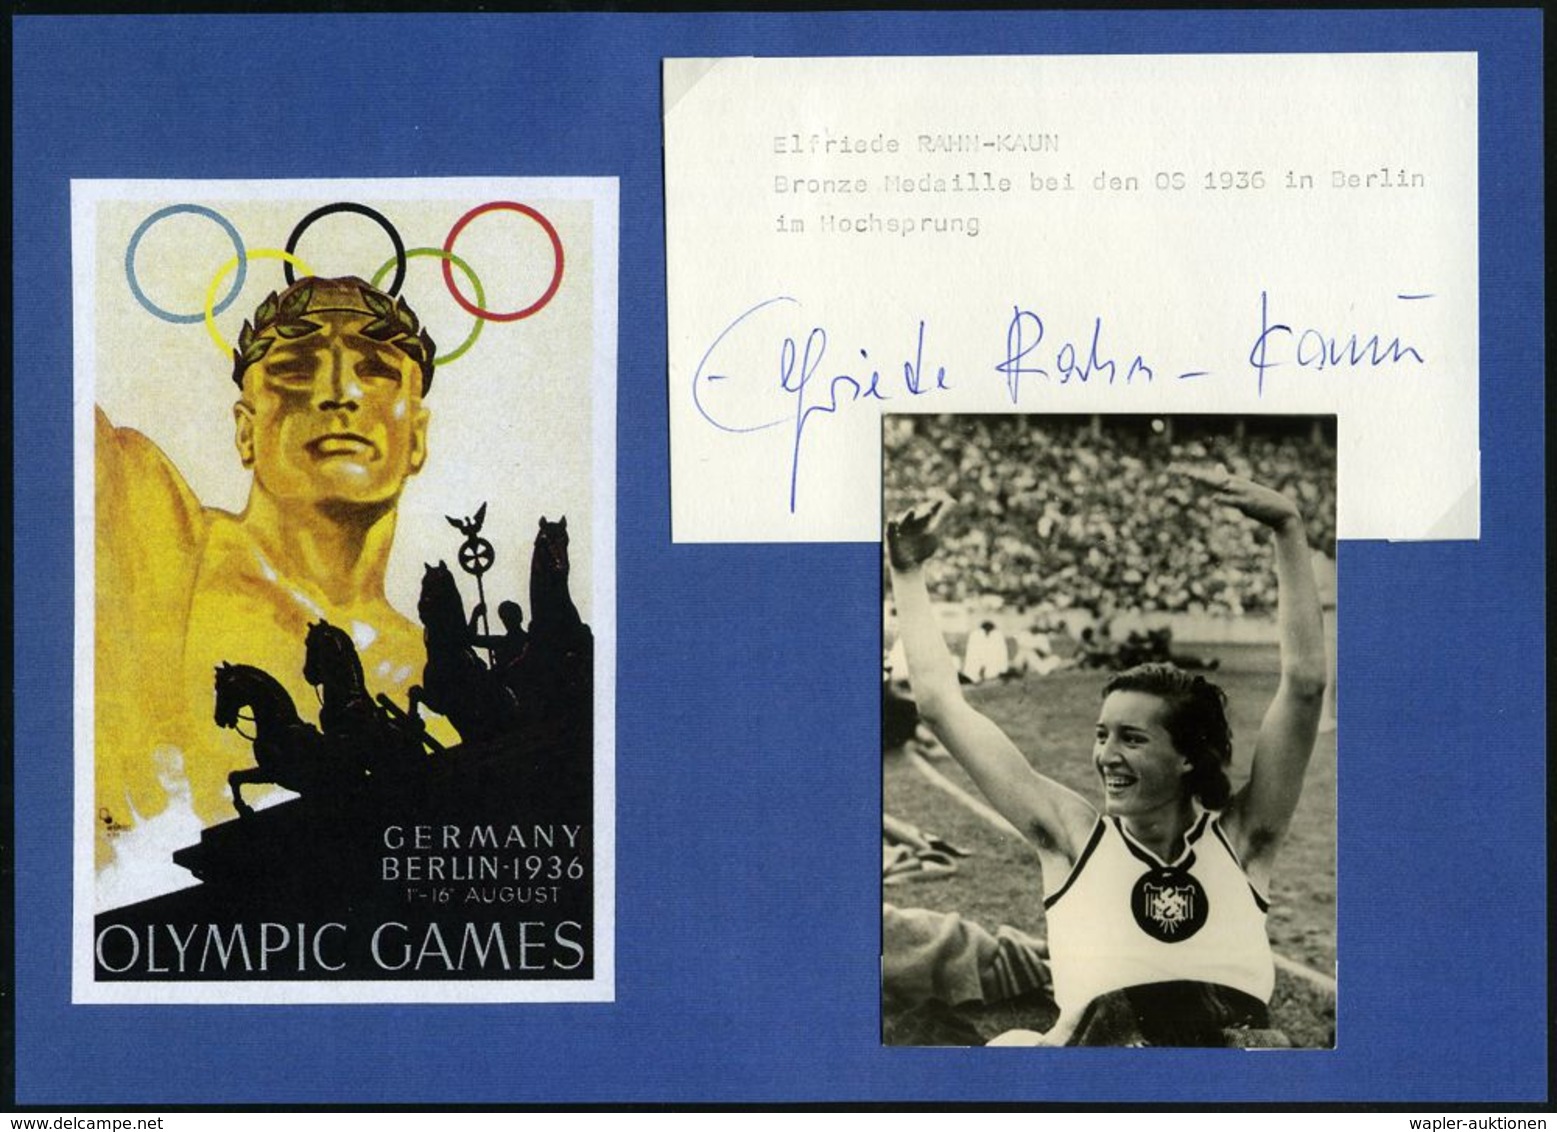 DEUTSCHES REICH 1936 S/w.-Abb.: Elfriede  K A U N  + Orig. Autogr. "Elfriede Rahn-Kaun" = Bronze, Hochsprung, Olympiade  - Atletiek